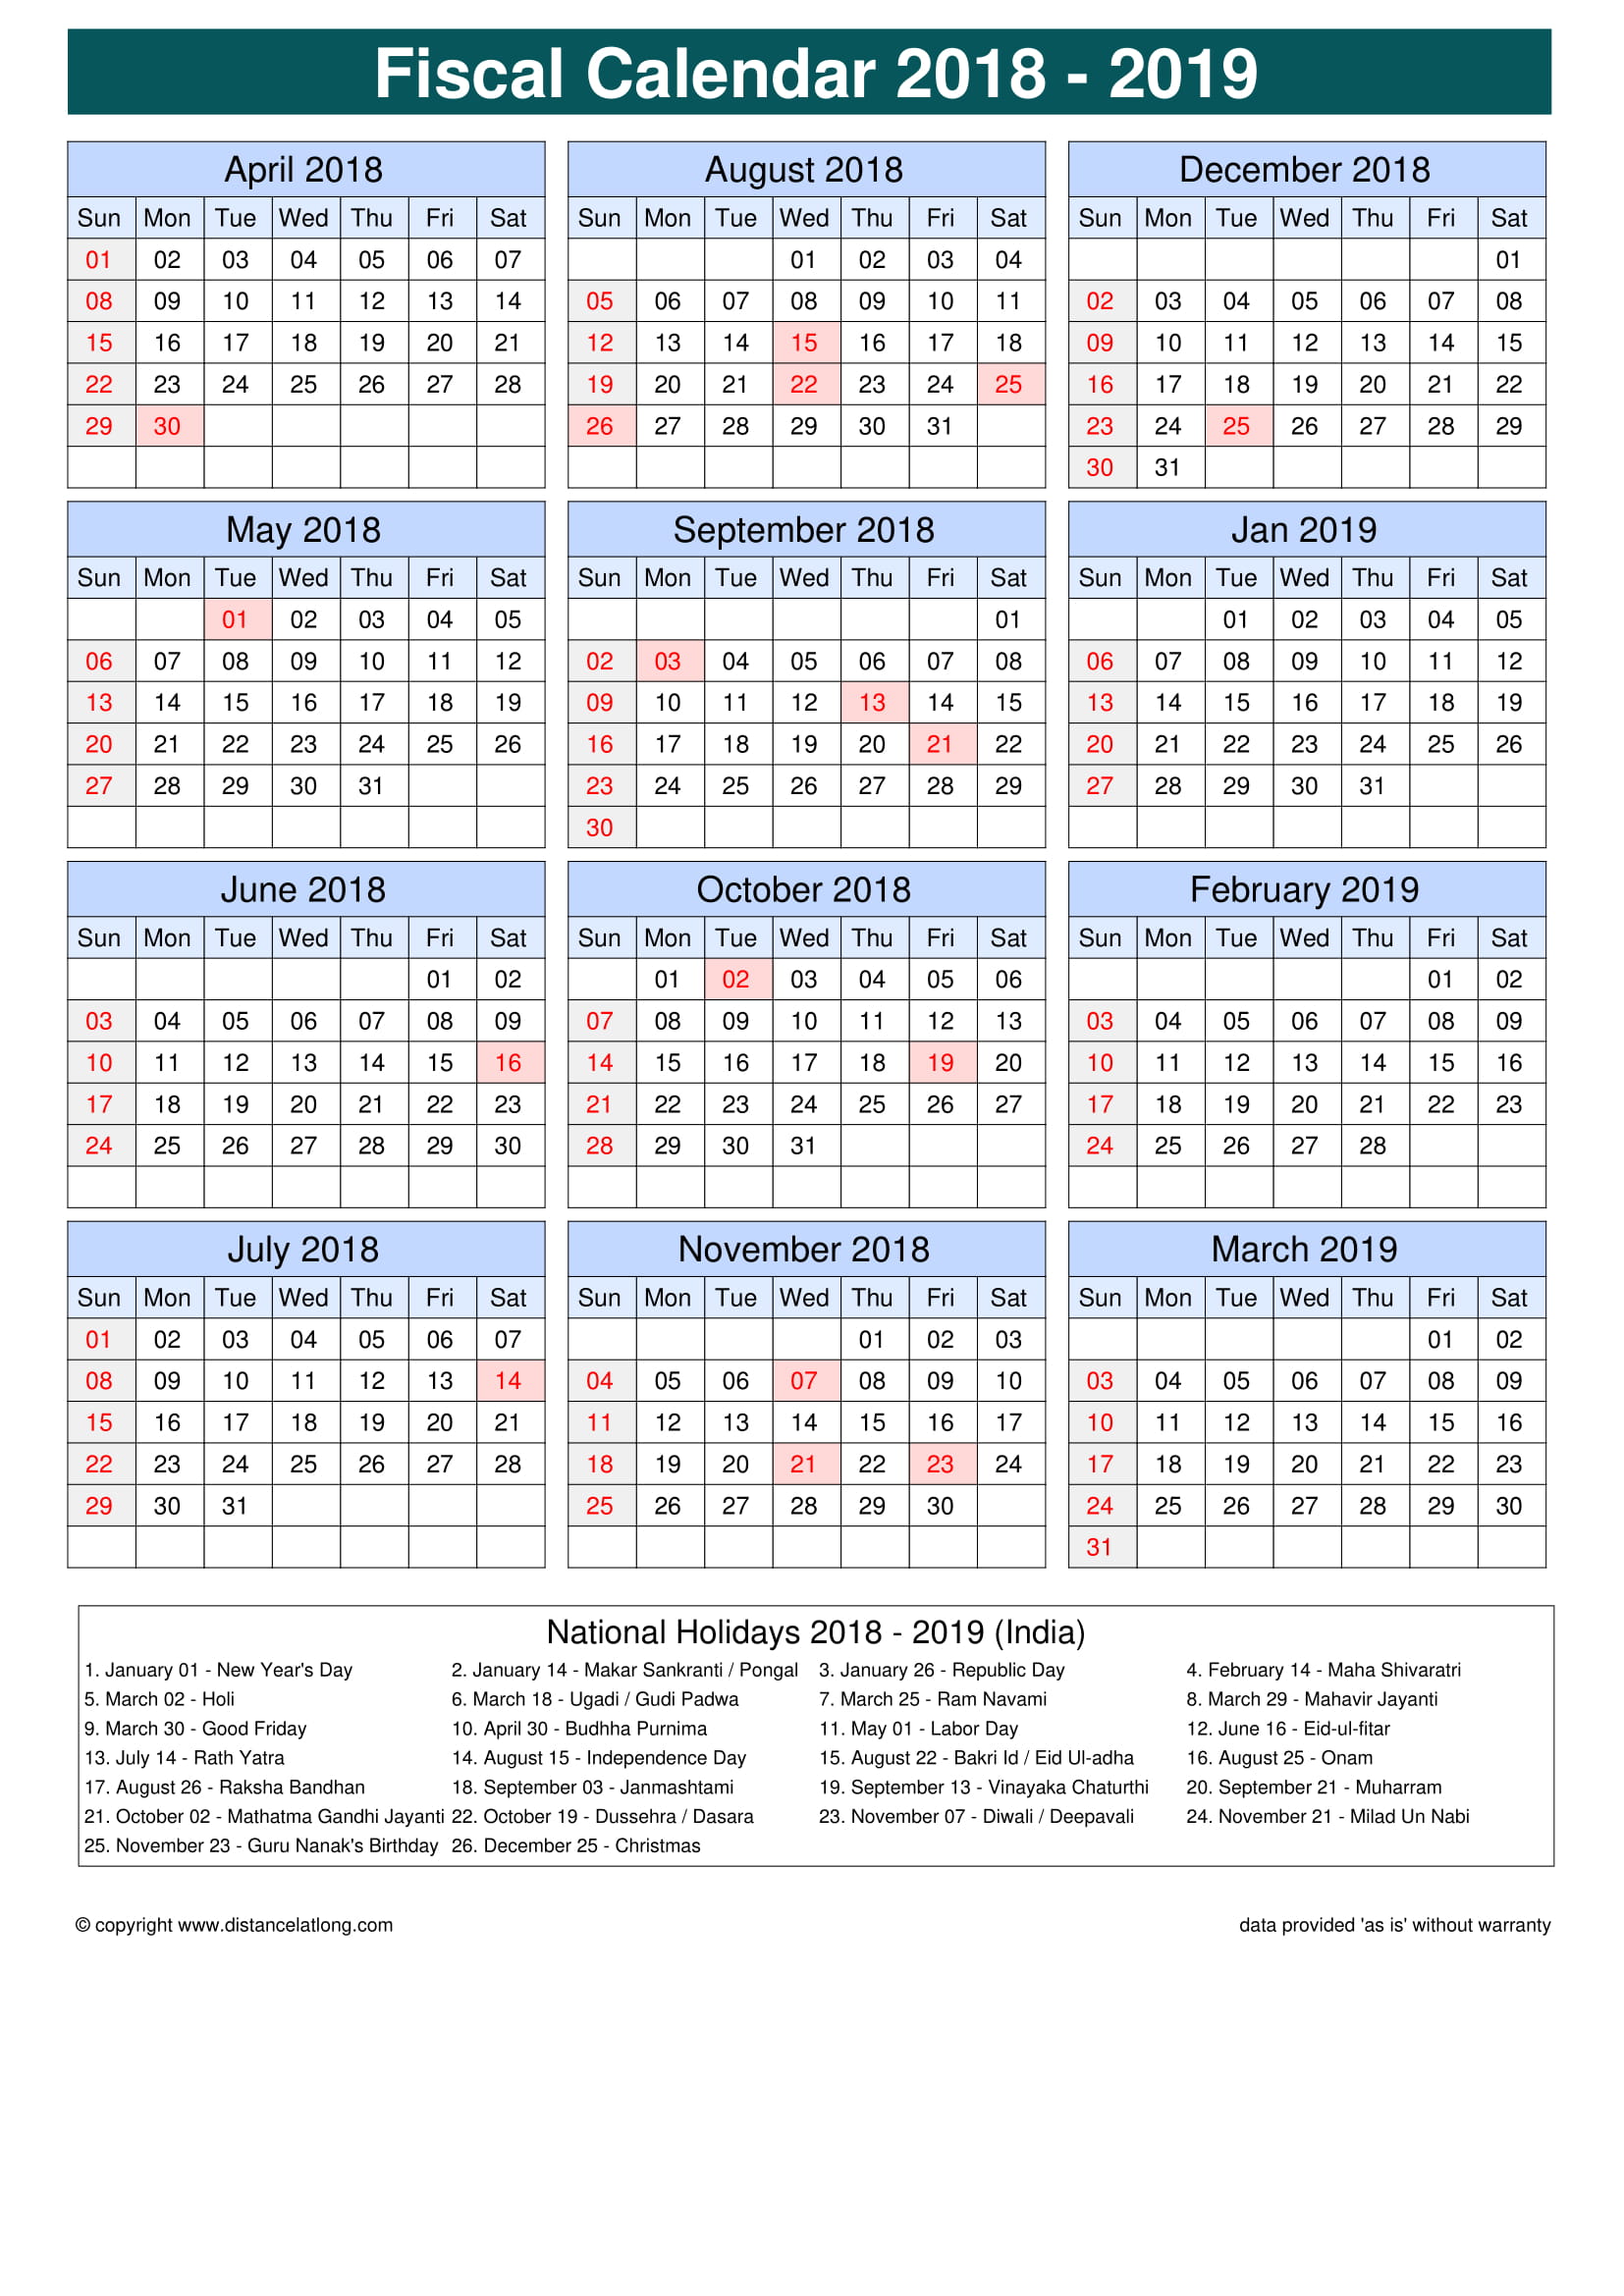 free India fiscal holidays printable calendar template